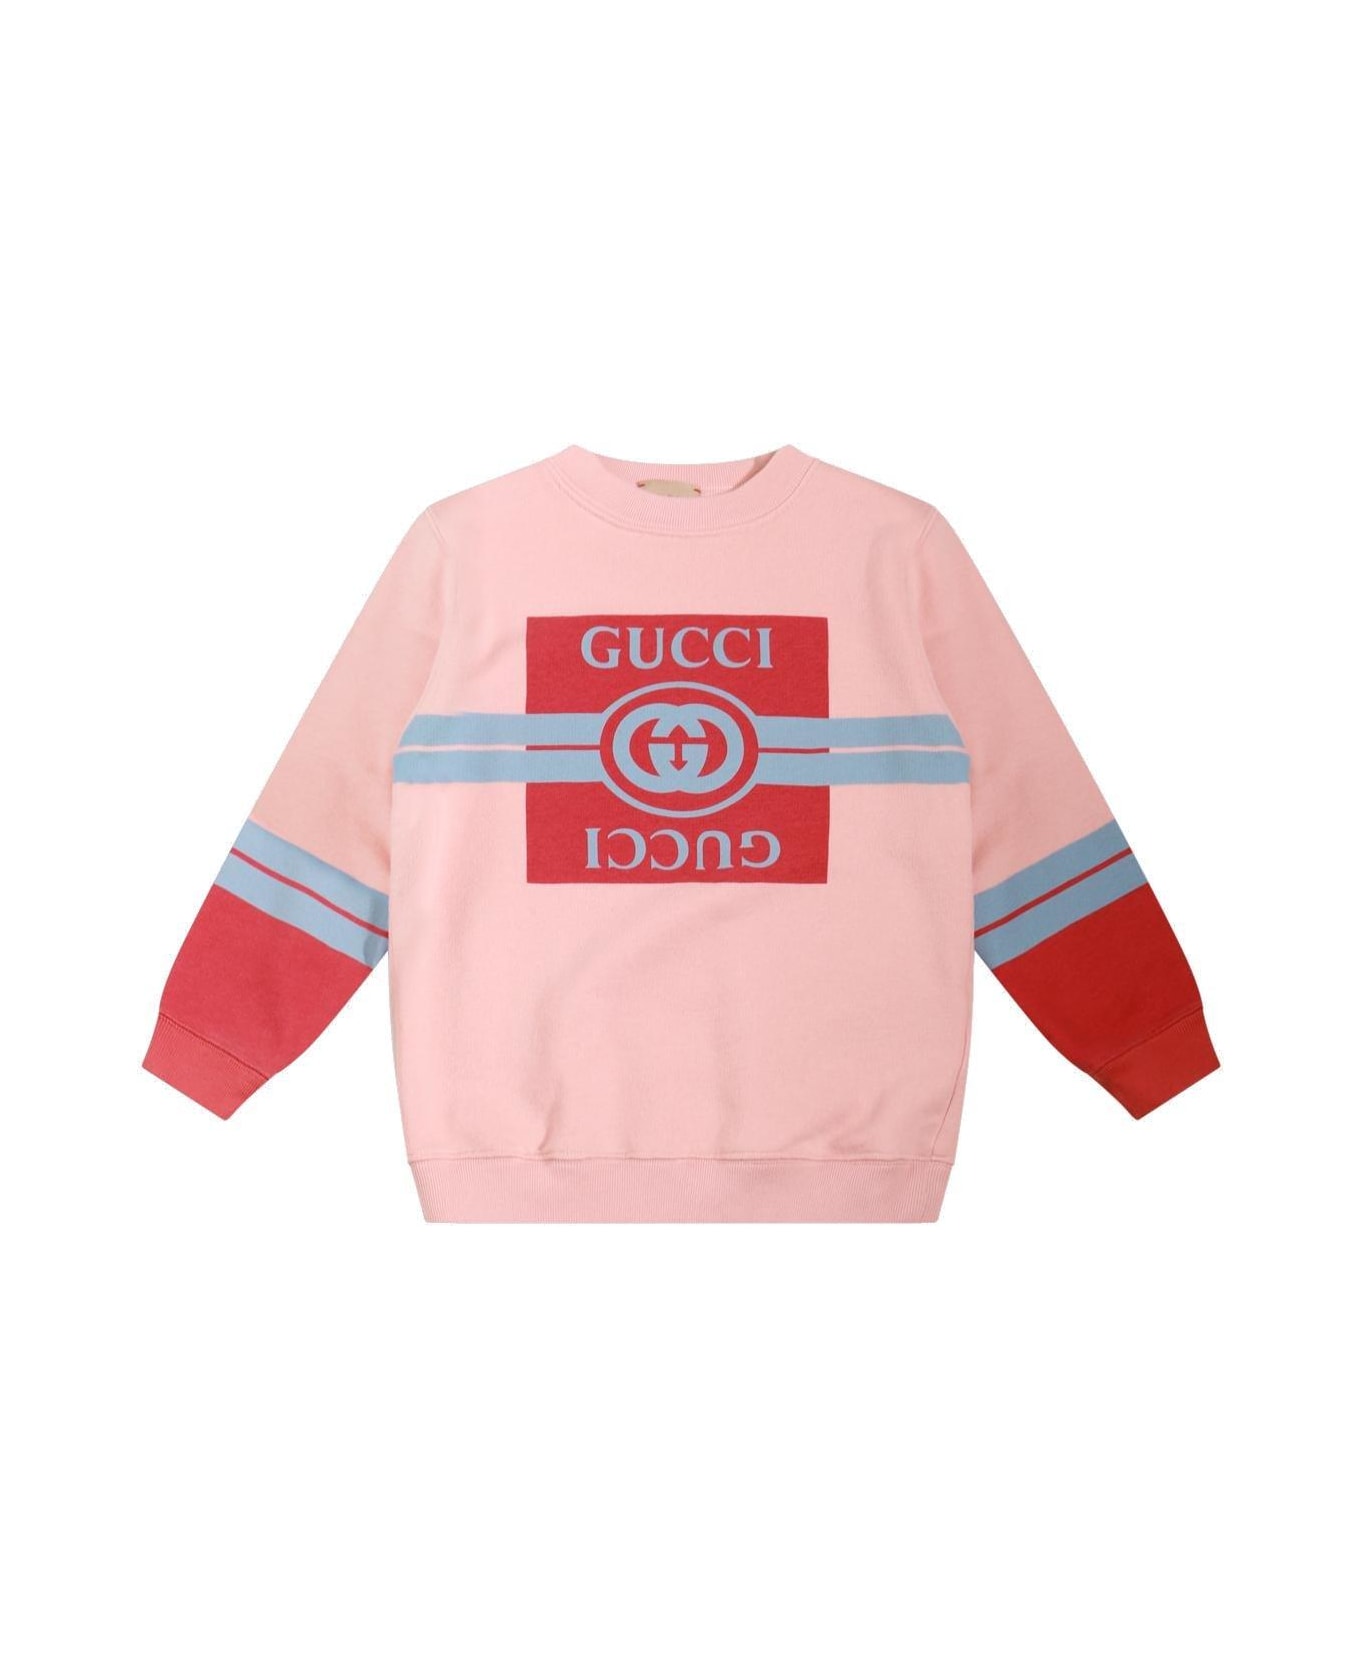 Gucci Logo Printed Crewneck Sweatshirt - Rosa